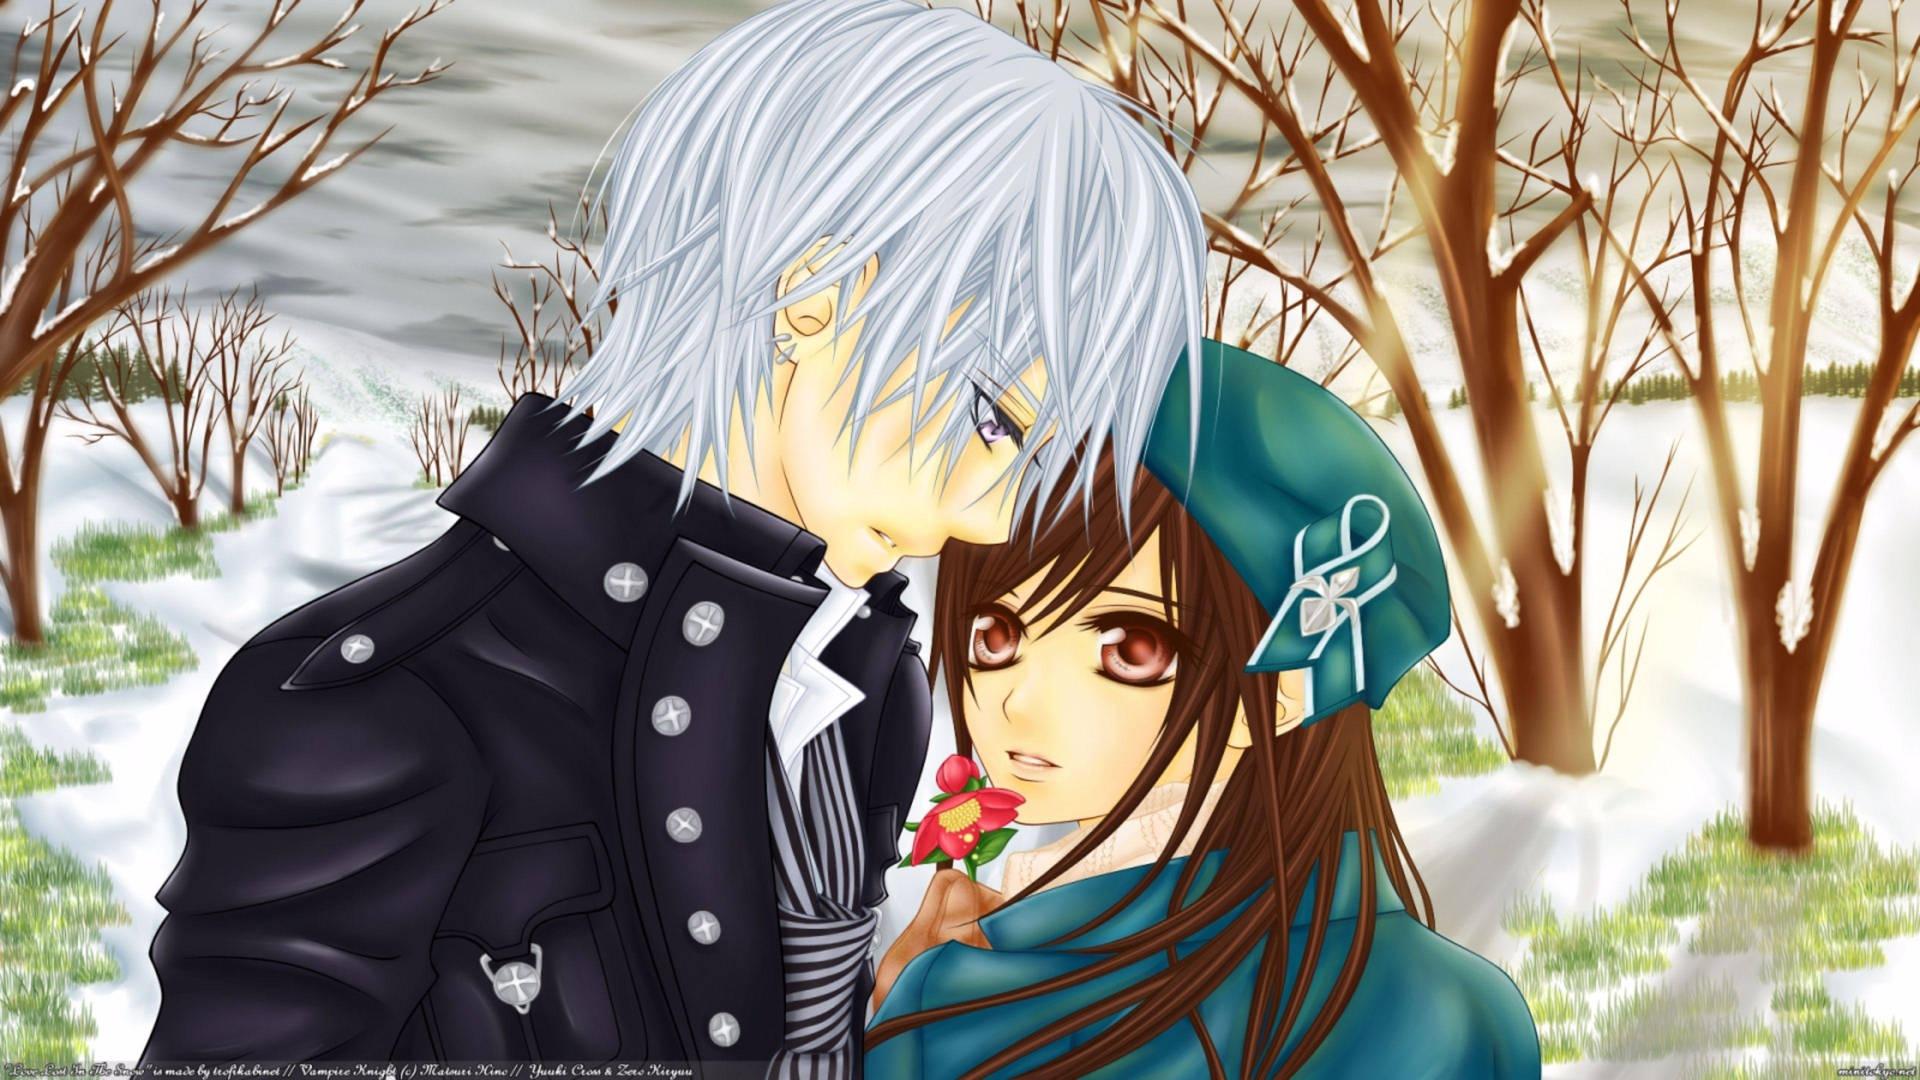 Caption: Romantic Anime Couple Embracing In The Fall Season